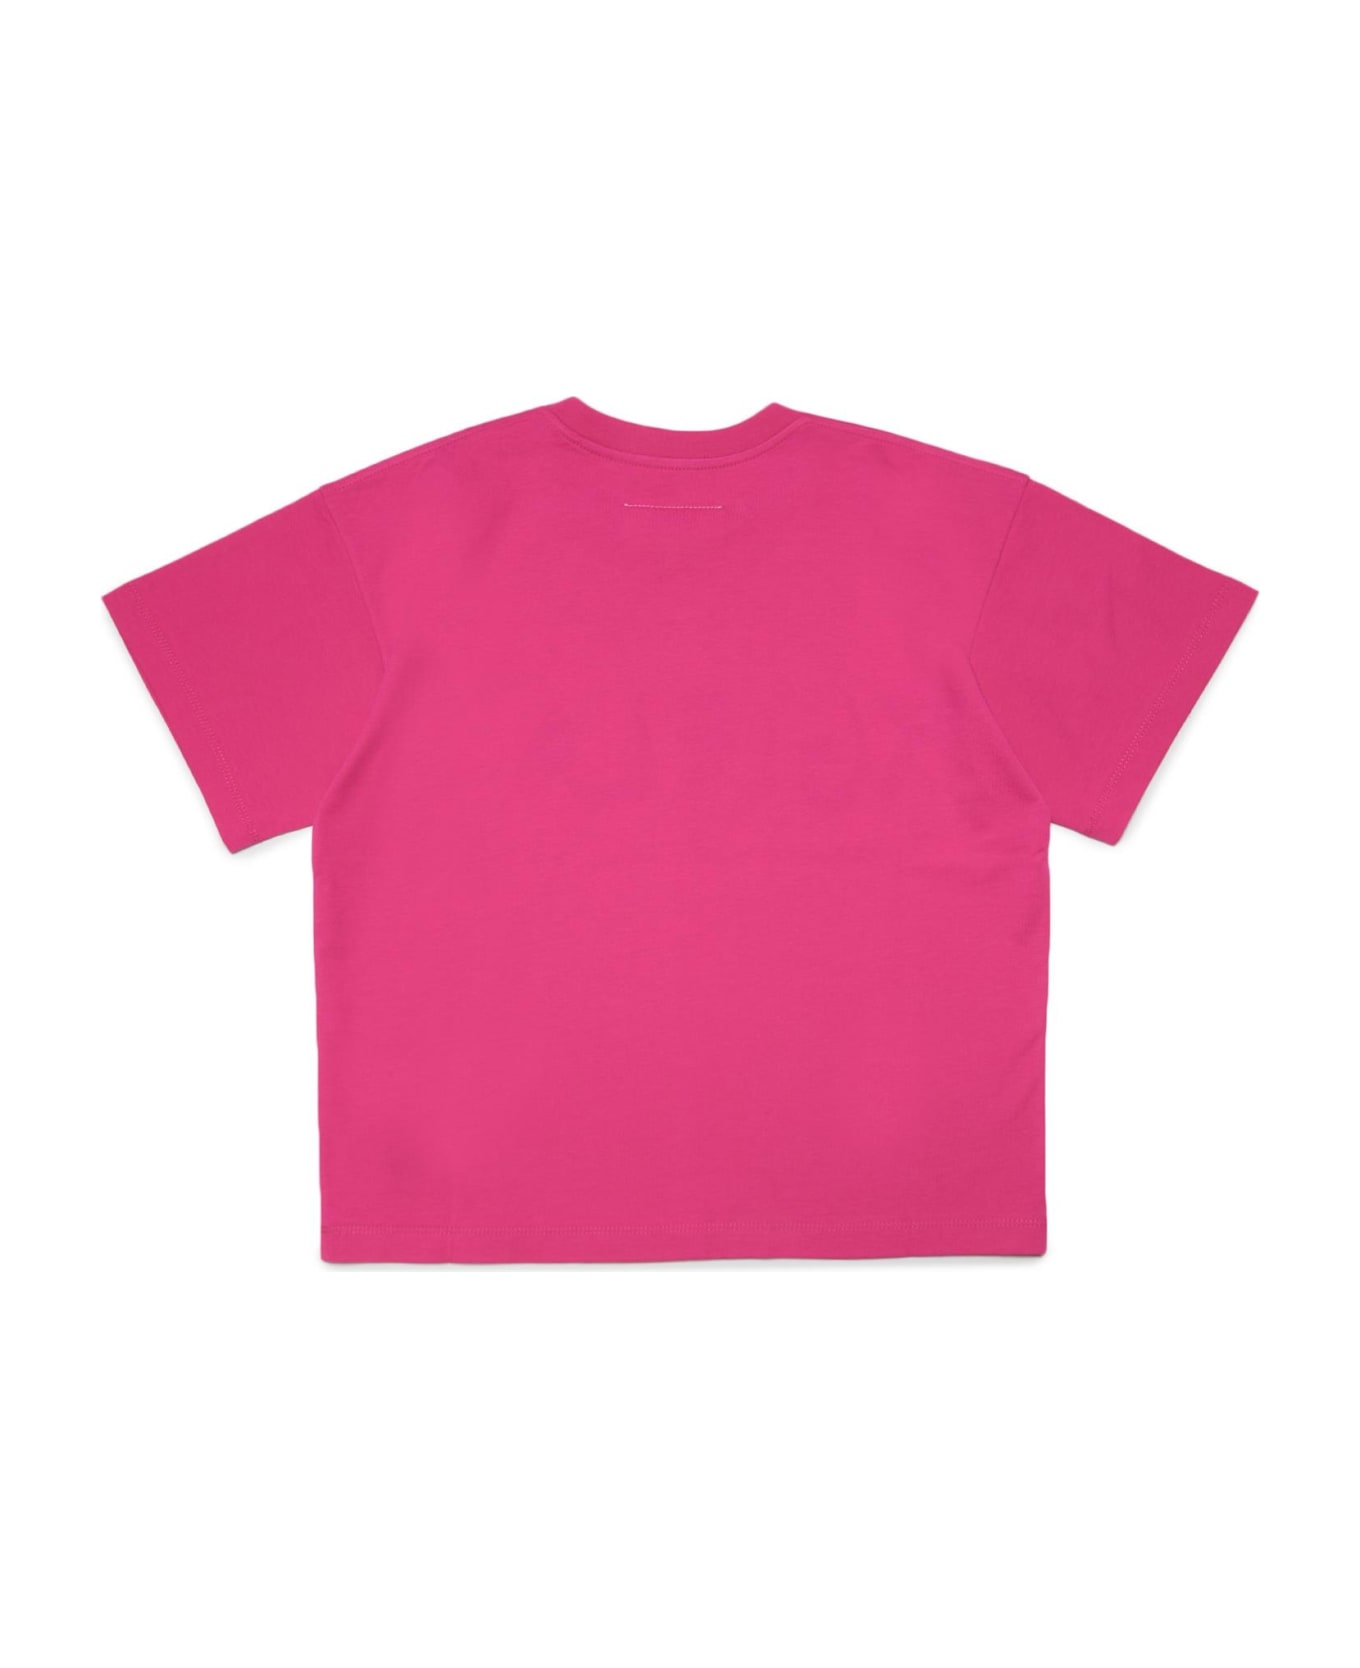 MM6 Maison Margiela Printed T-shirt - Pink